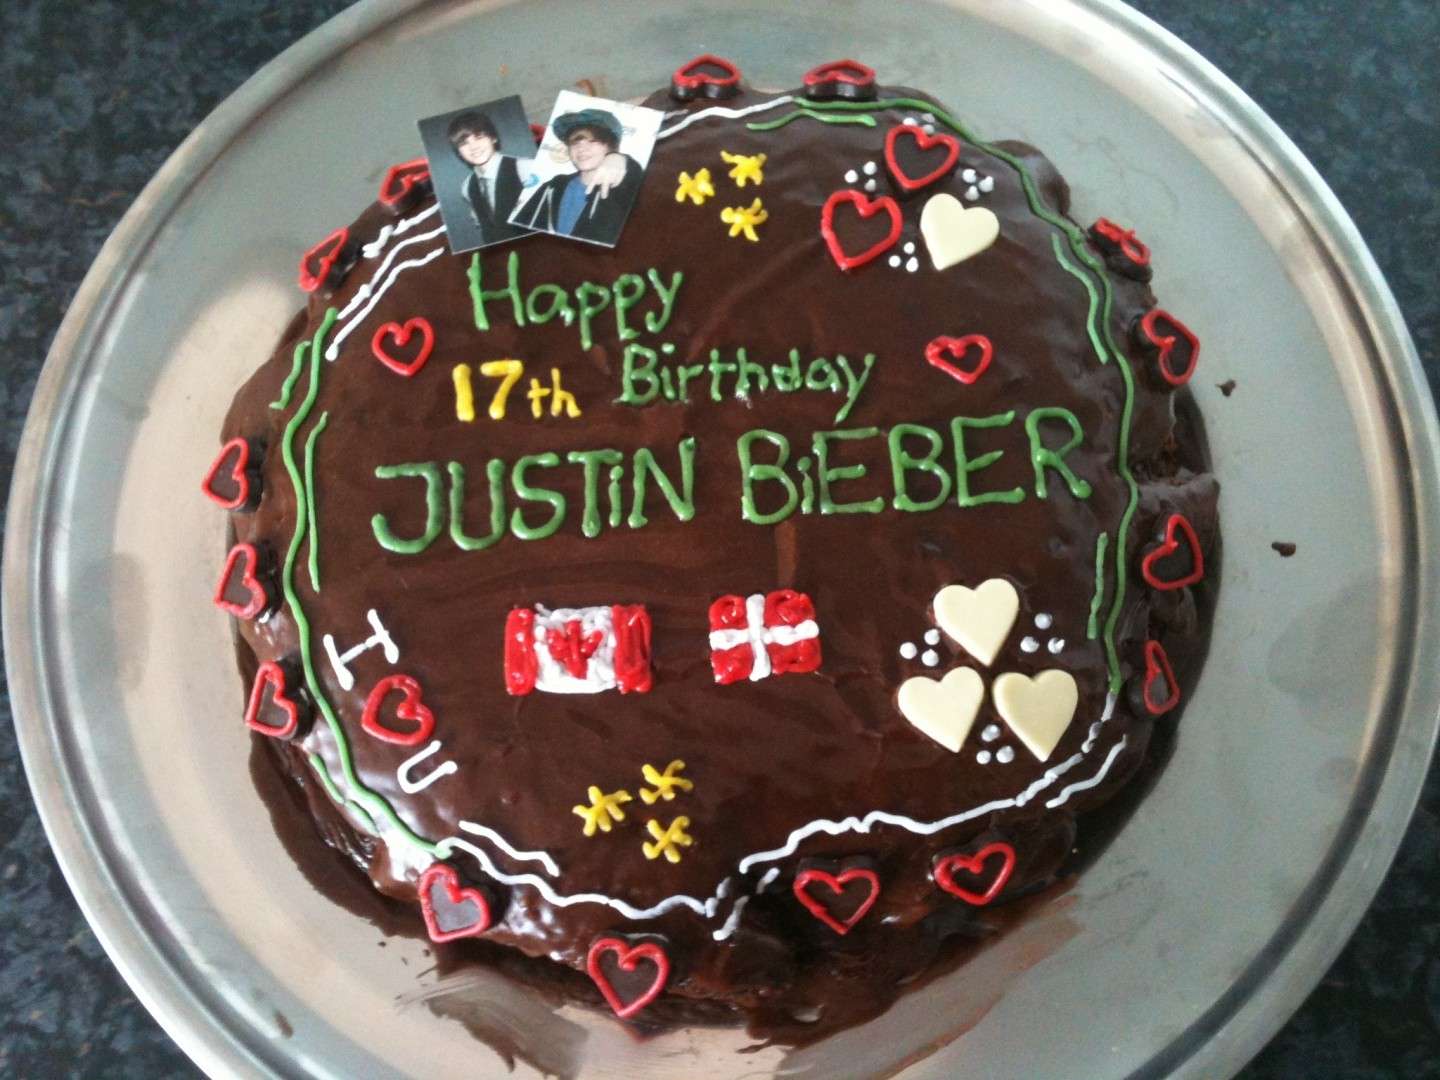 Torta al cioccolato dedicata a Justin Bieber